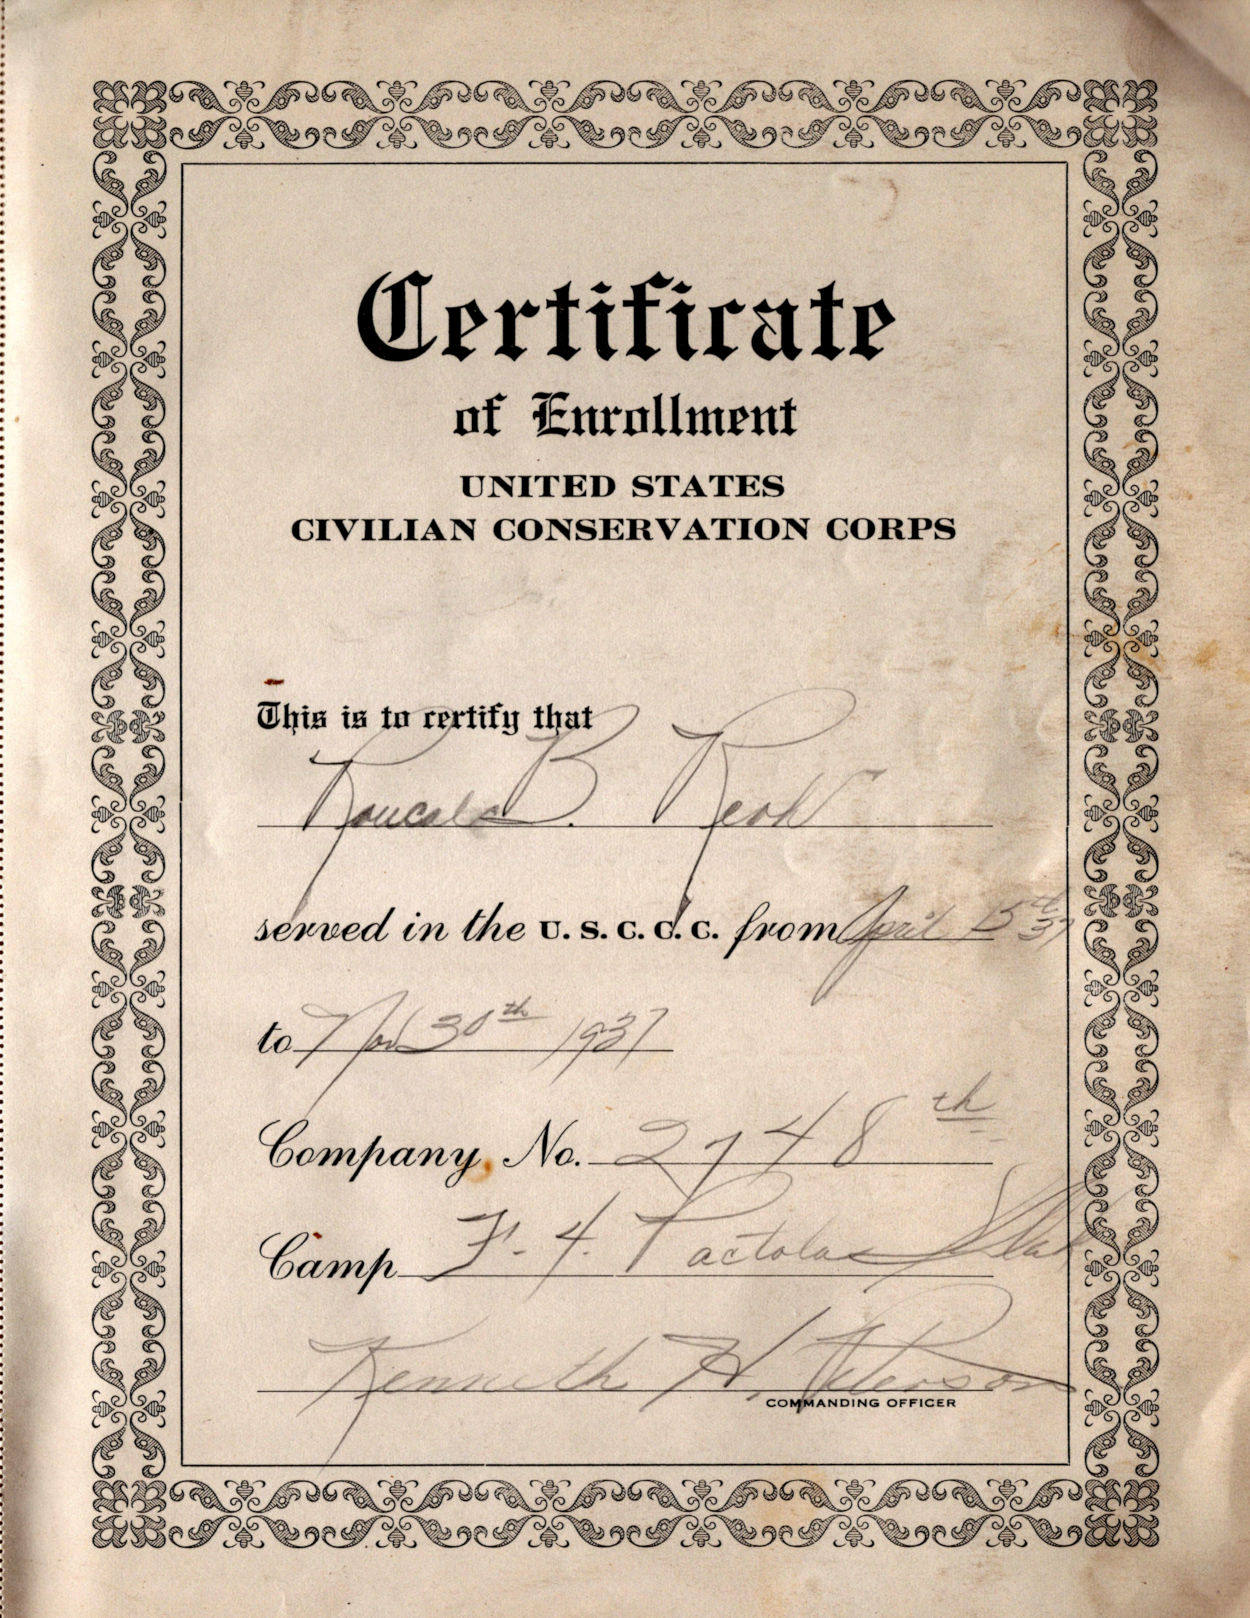 CCC Certificate of Enrollment